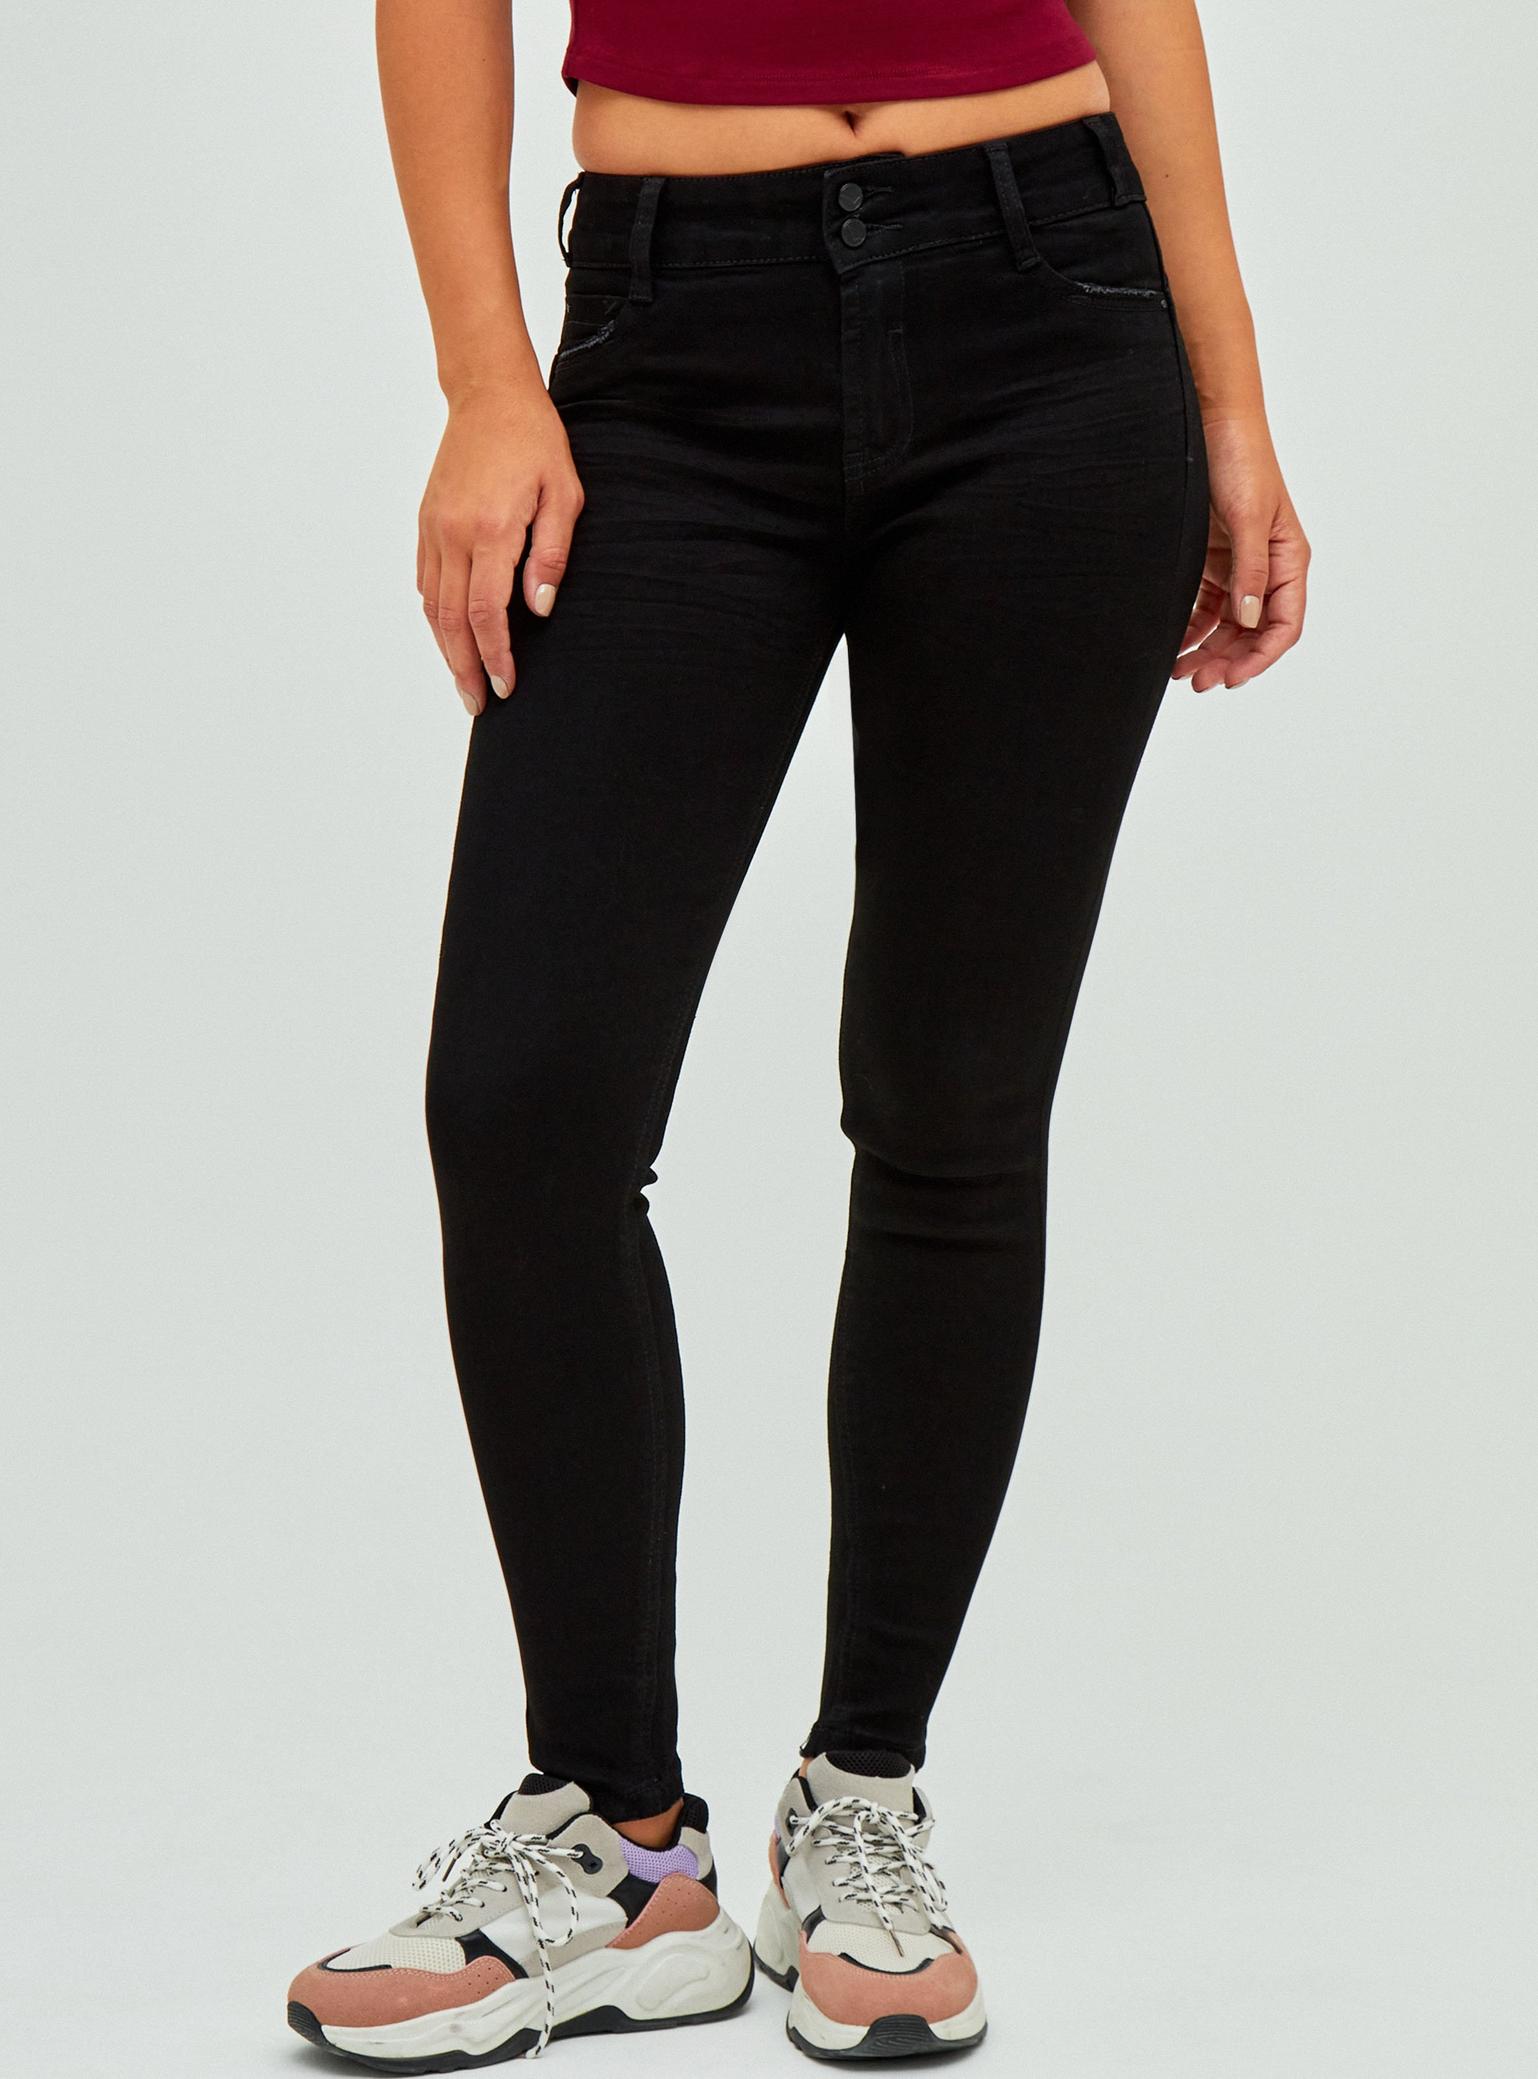 Oferta de Jeans Basico Skinny Push Up por $10490 en Paris